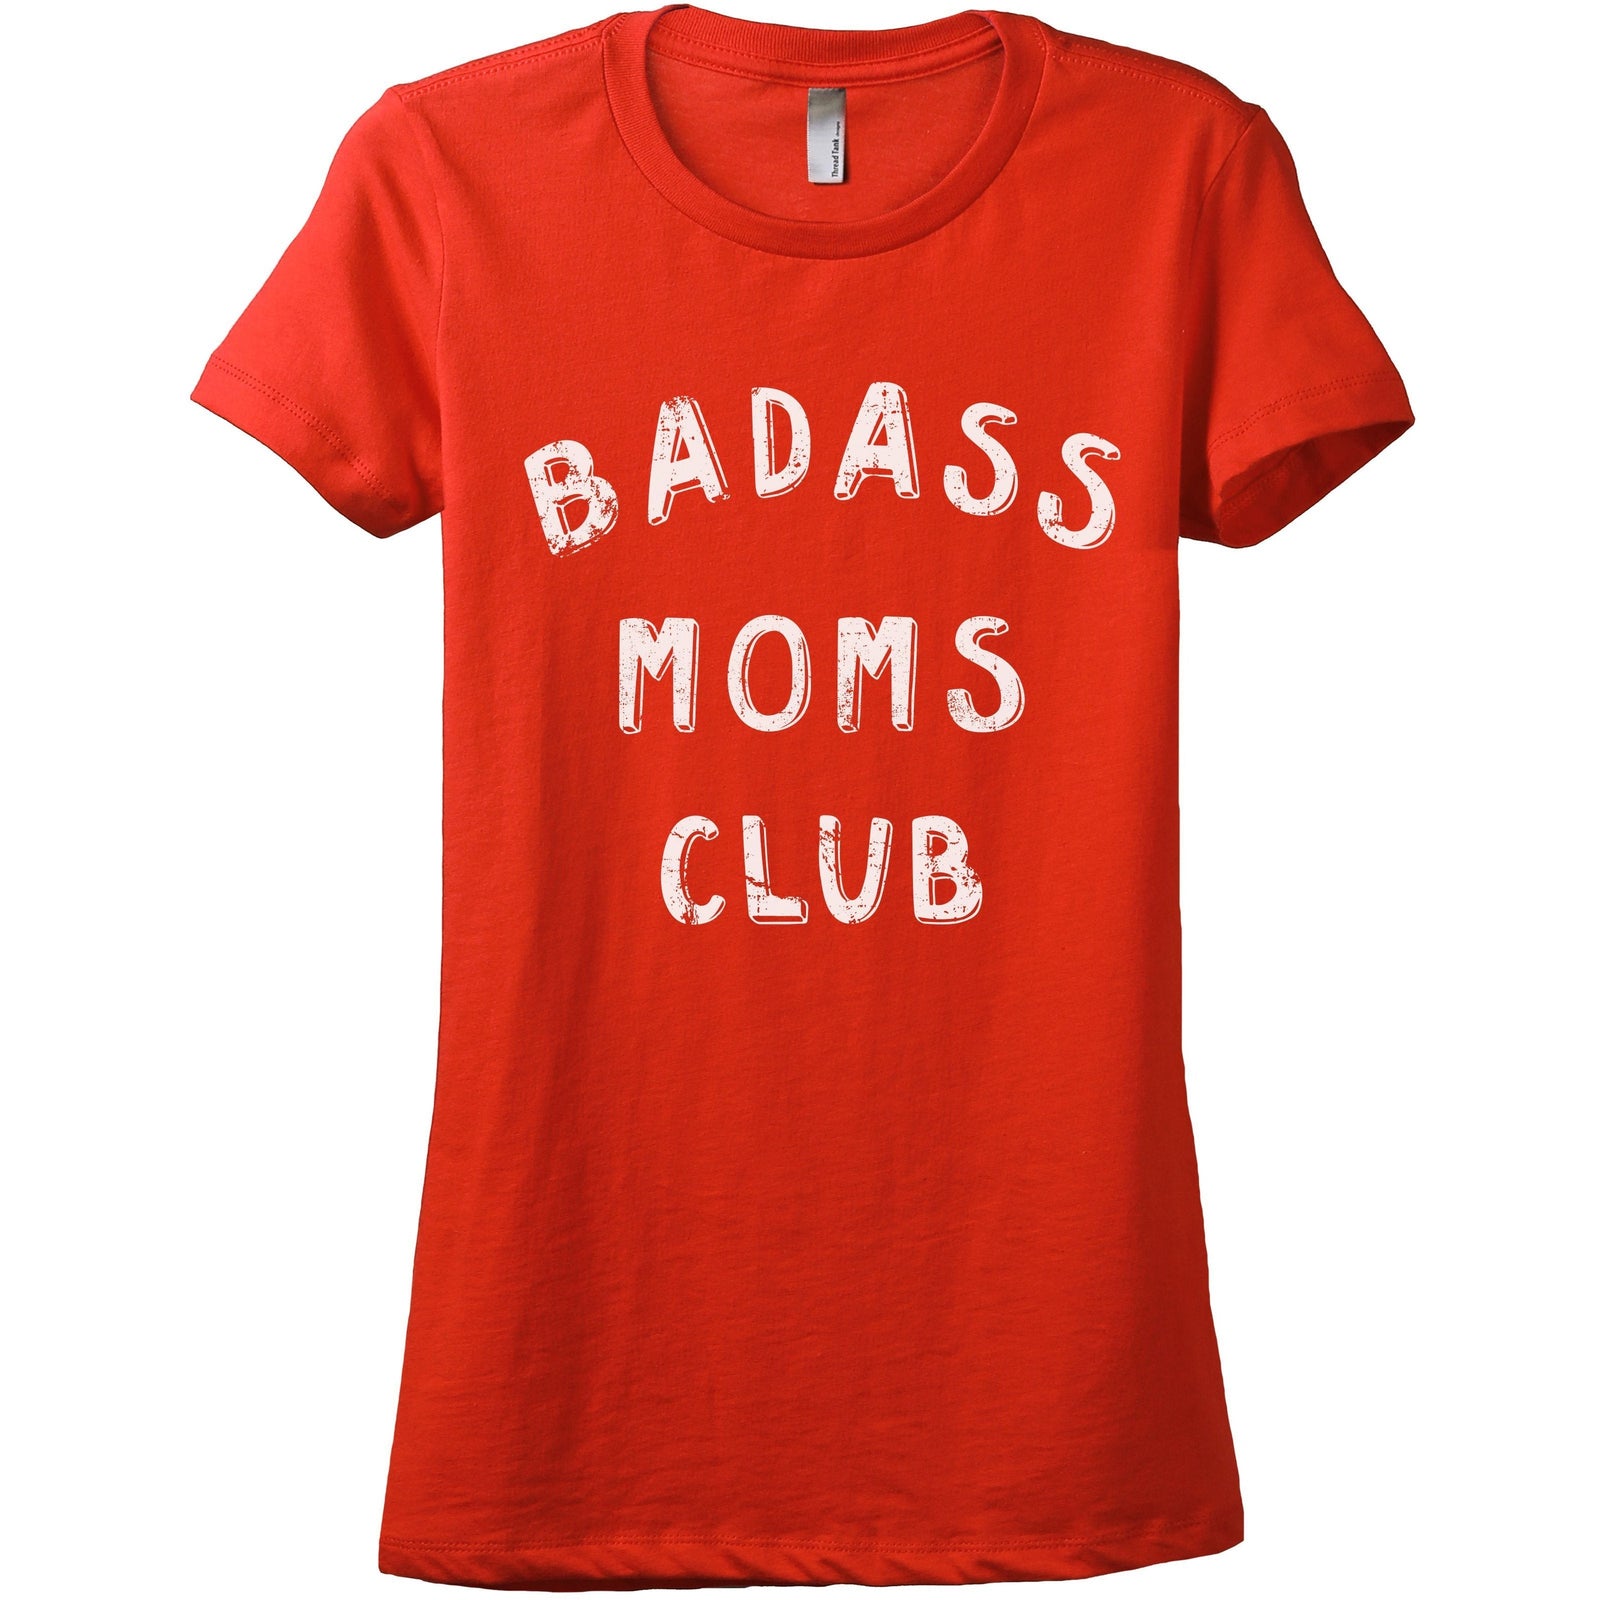 Badass MOMS Club